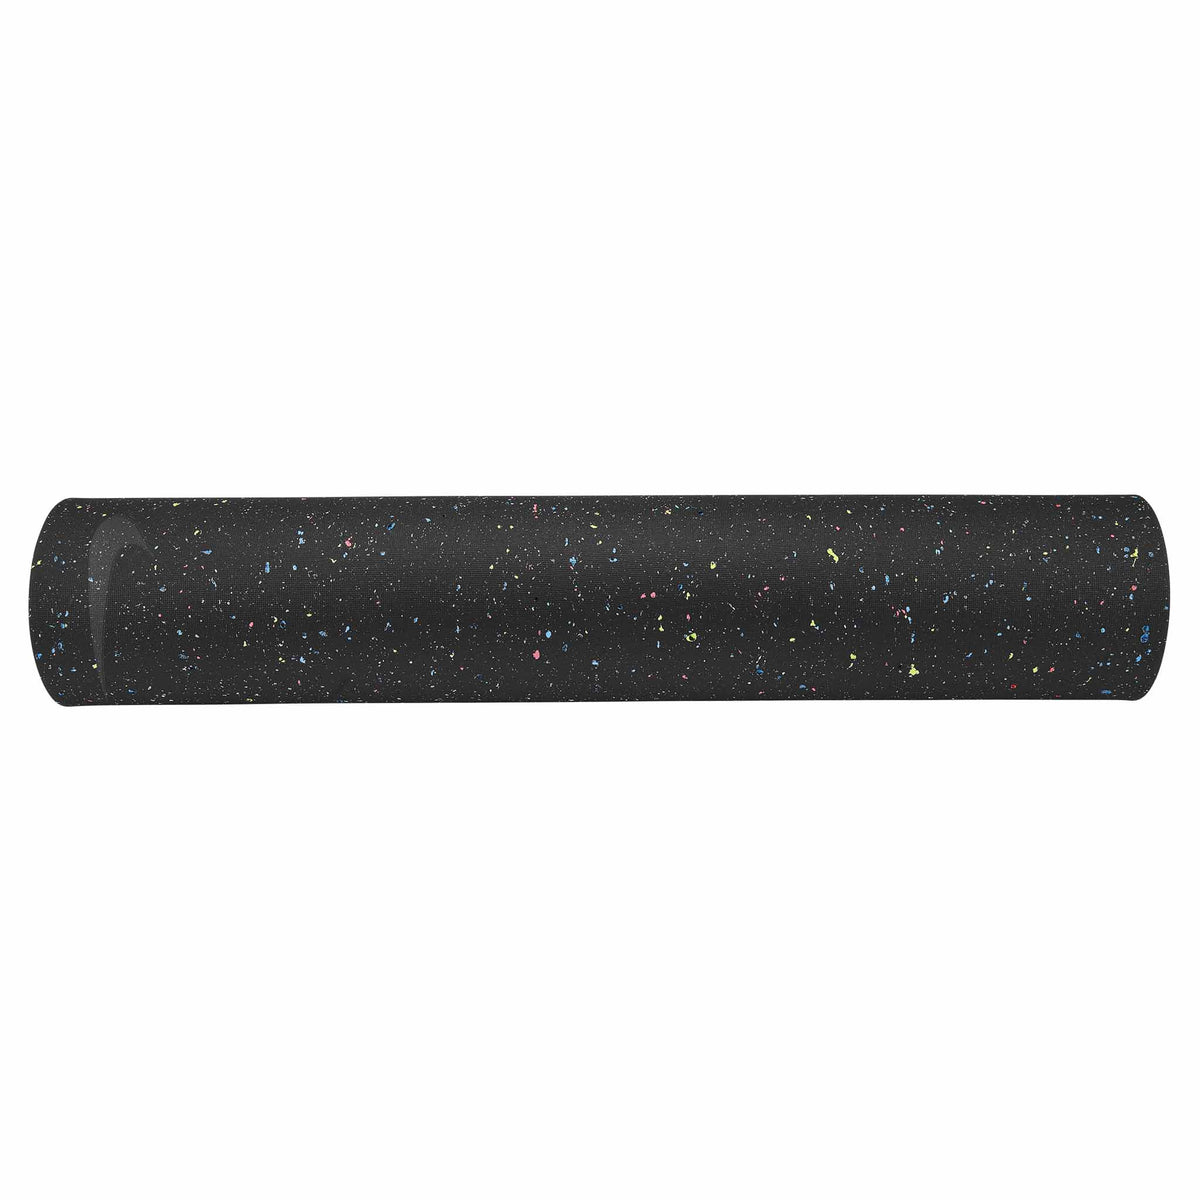 Nike Flow Yoga Mat 4mm tapis de yoga - Black / Anthracite